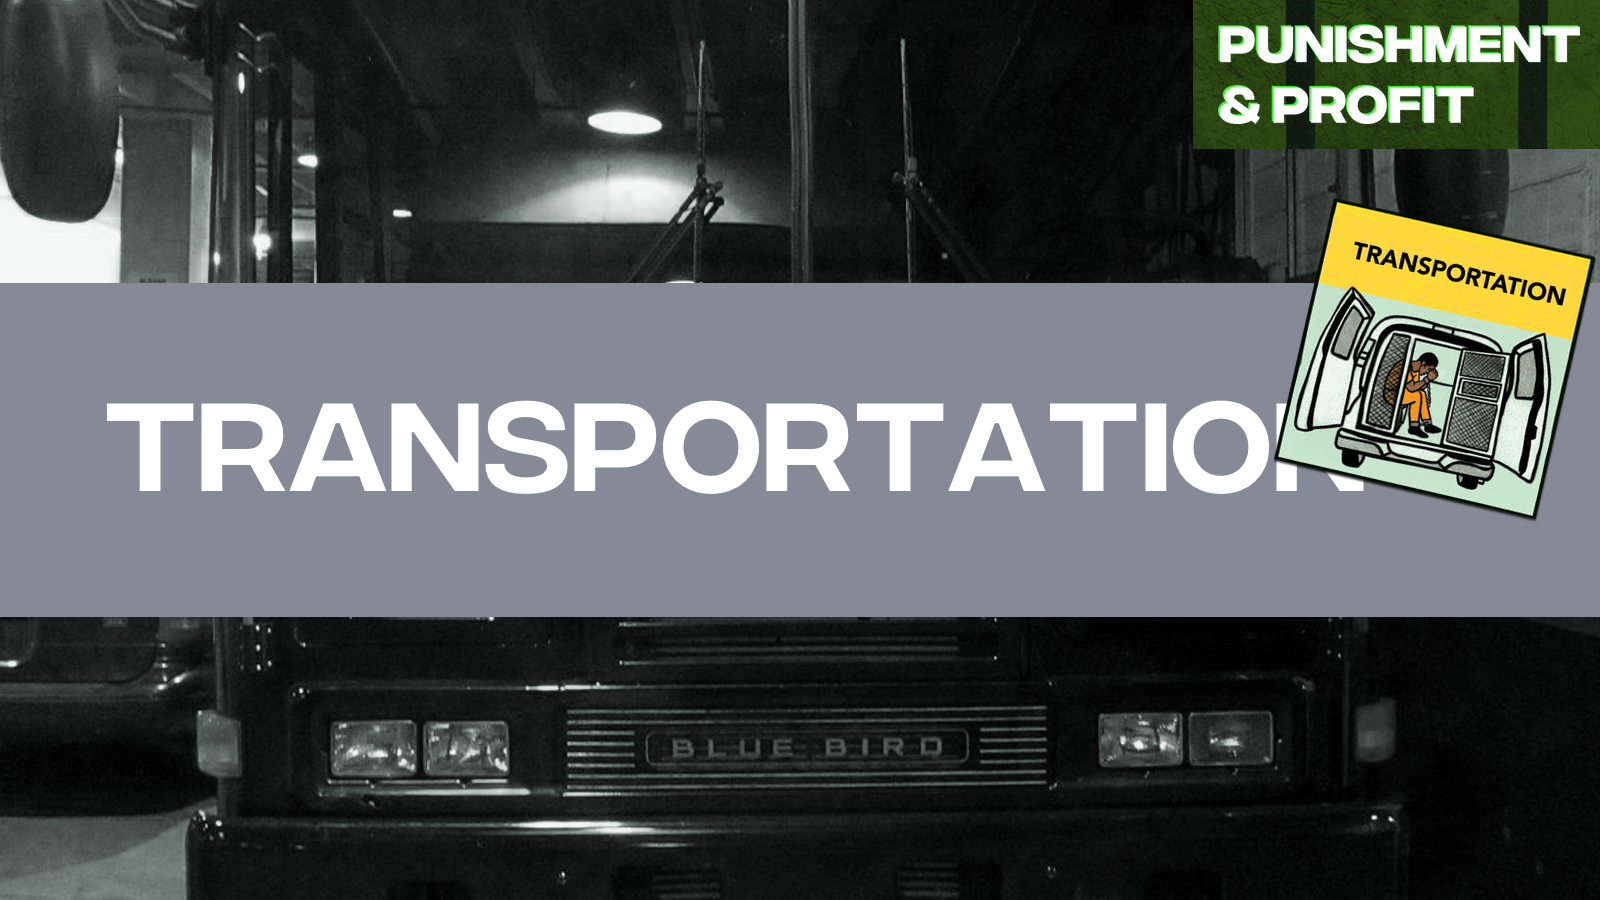 Punishment & Profit: Transportation